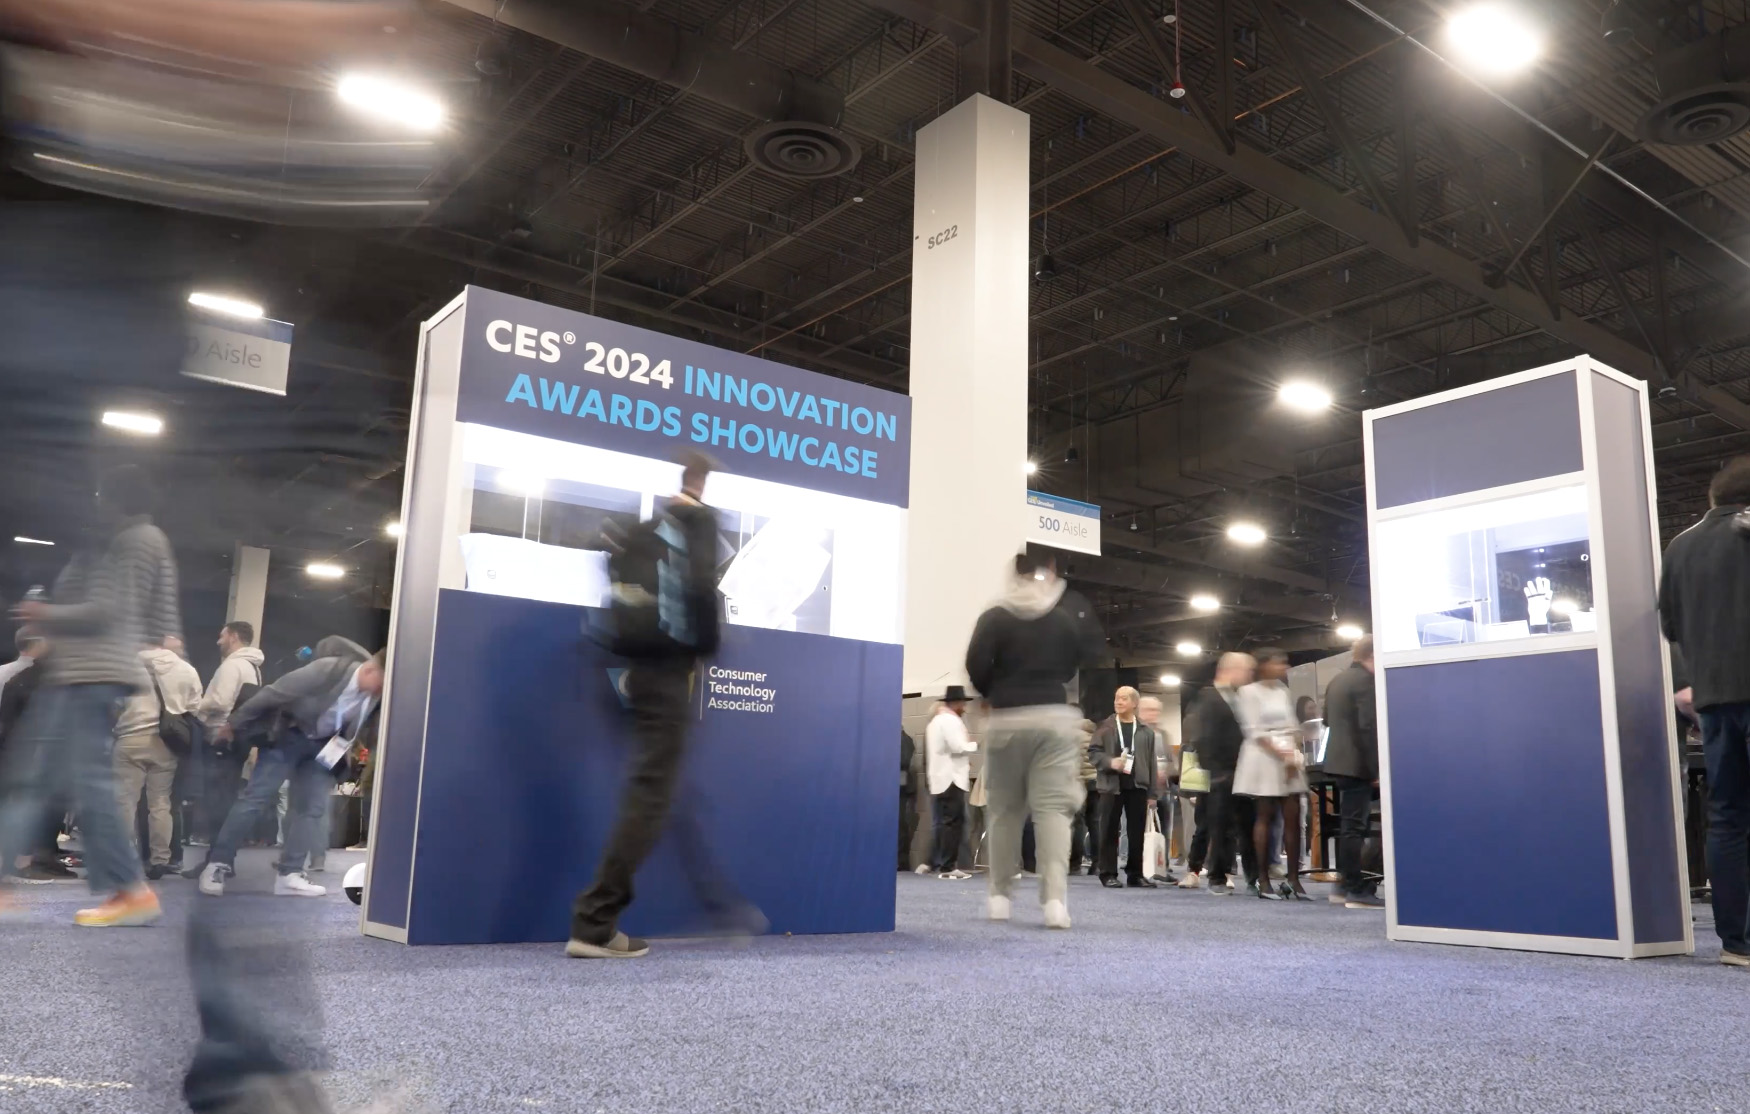 CES 2024 Innovation Awards Showcase at CES Unveiled Las Vegas